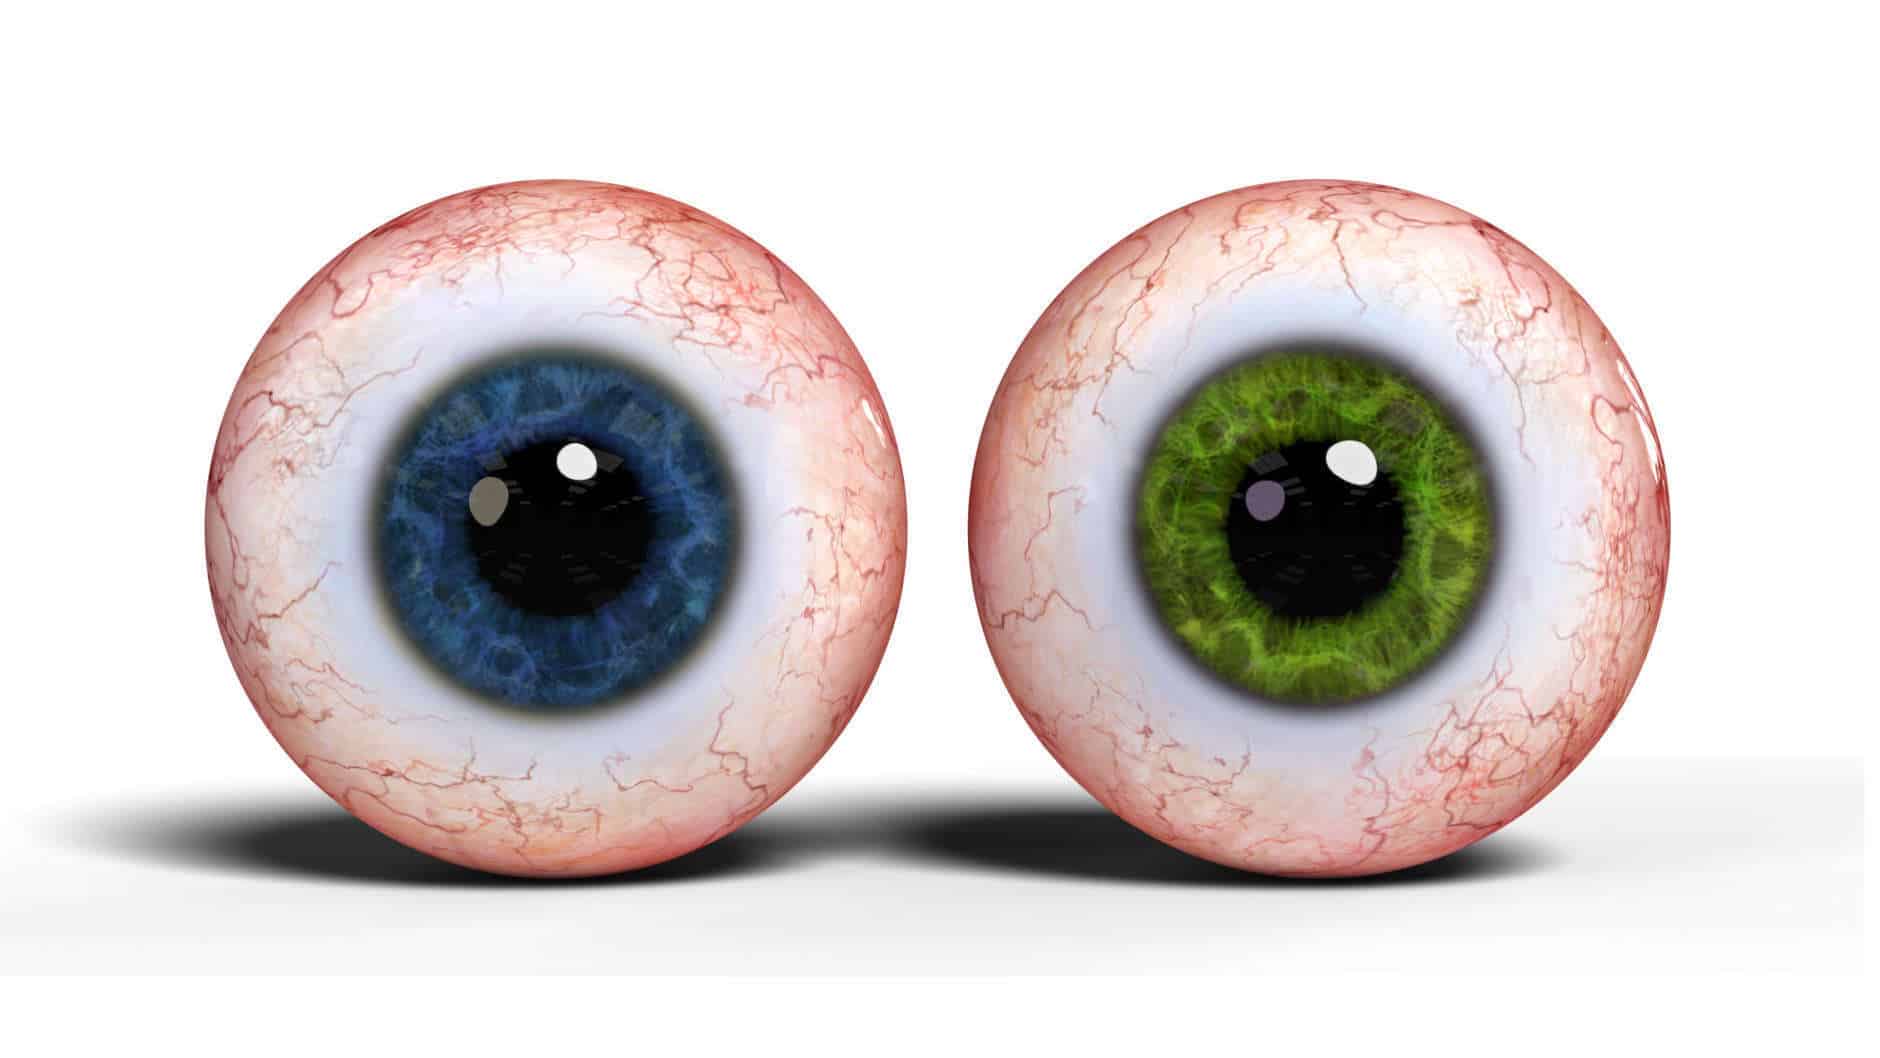 realistic eye balls isolated on white background